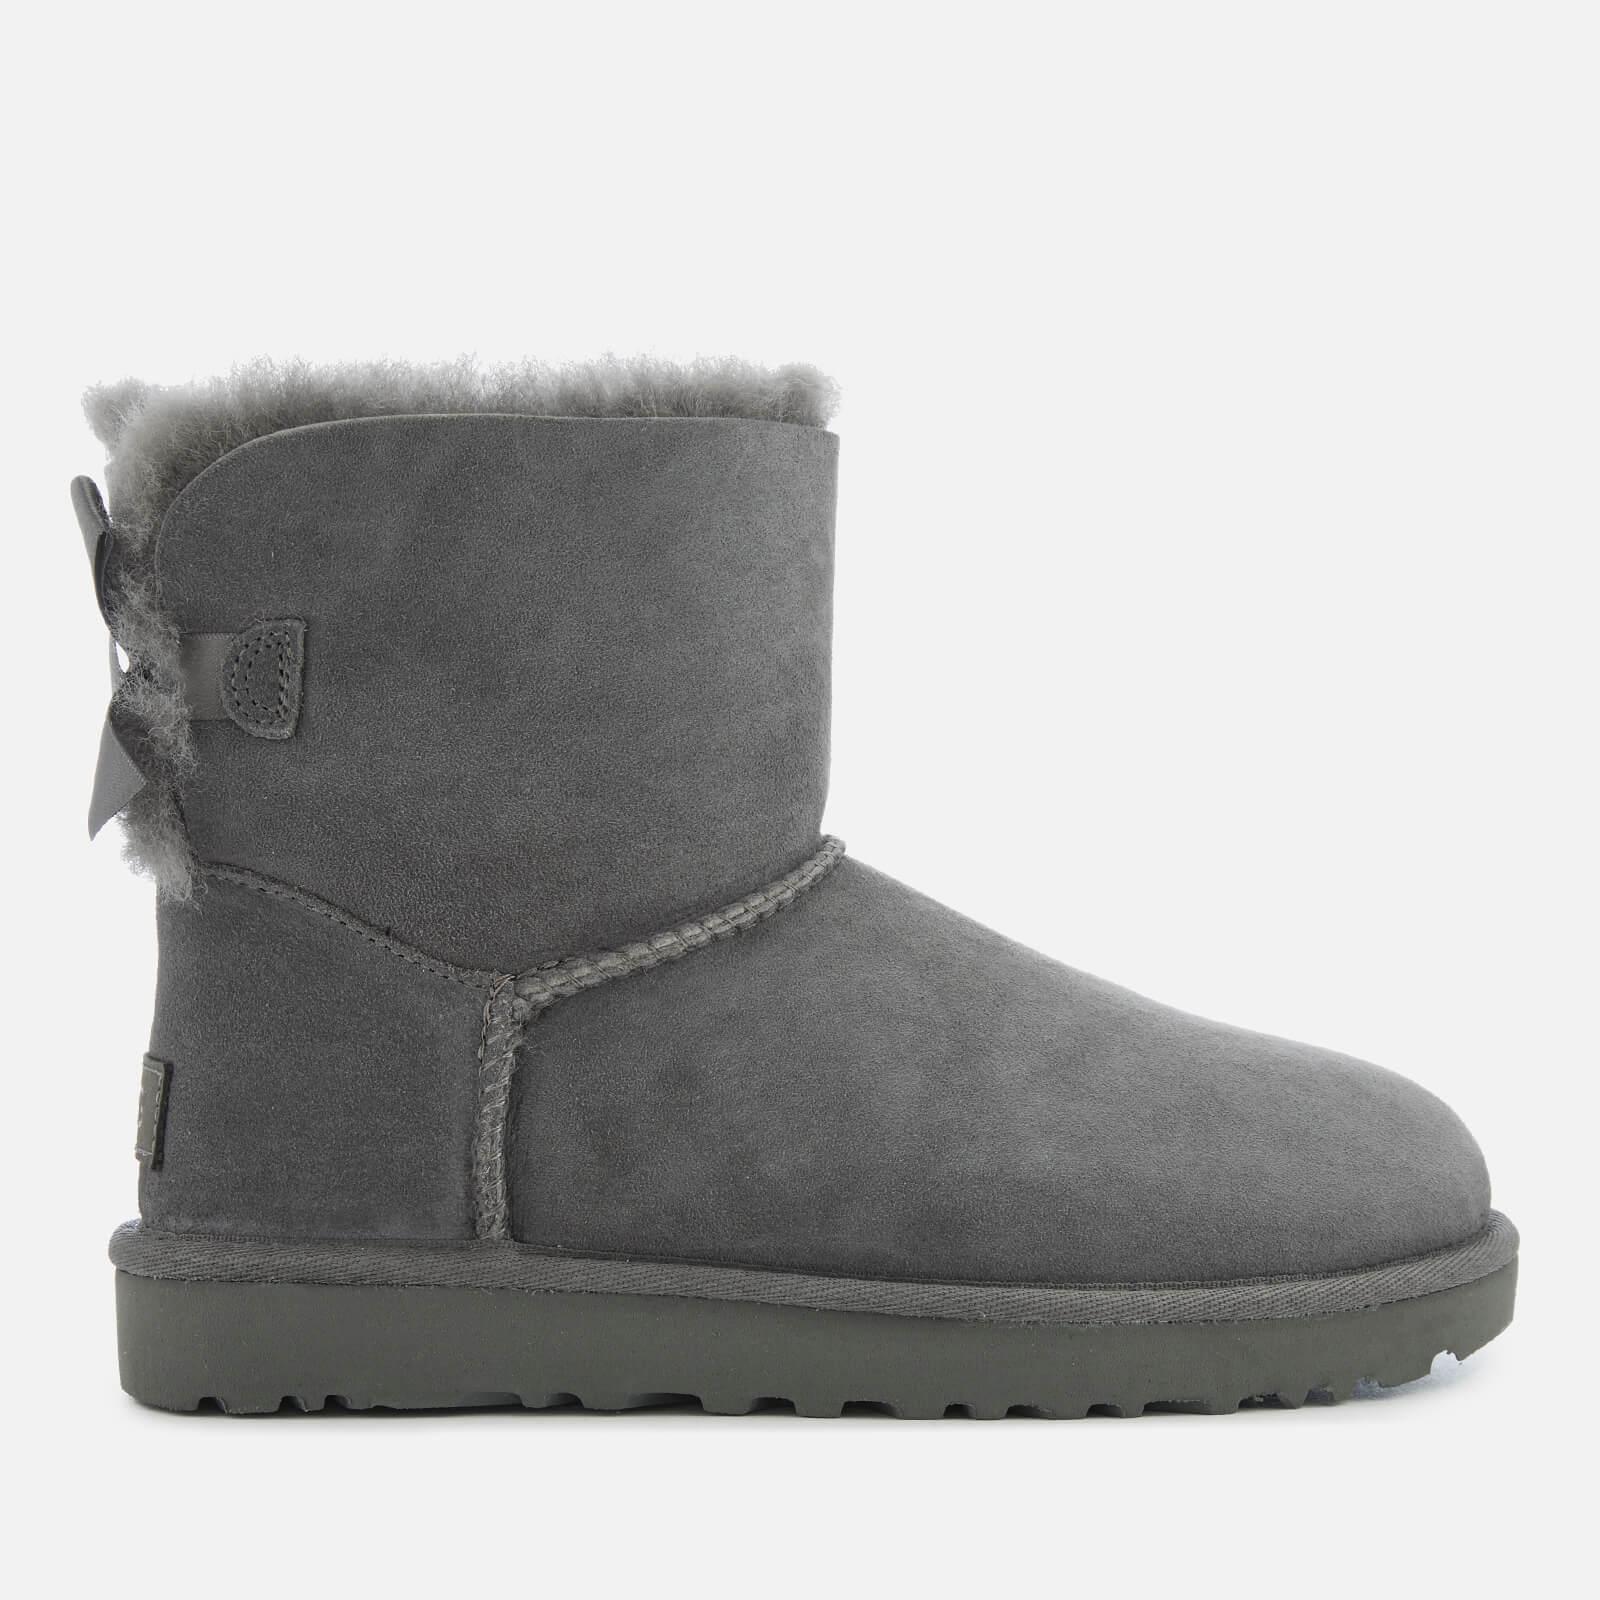 UGG Suede Mini Bailey Bow Ii Sheepskin Boots in Grey (Gray) - Lyst